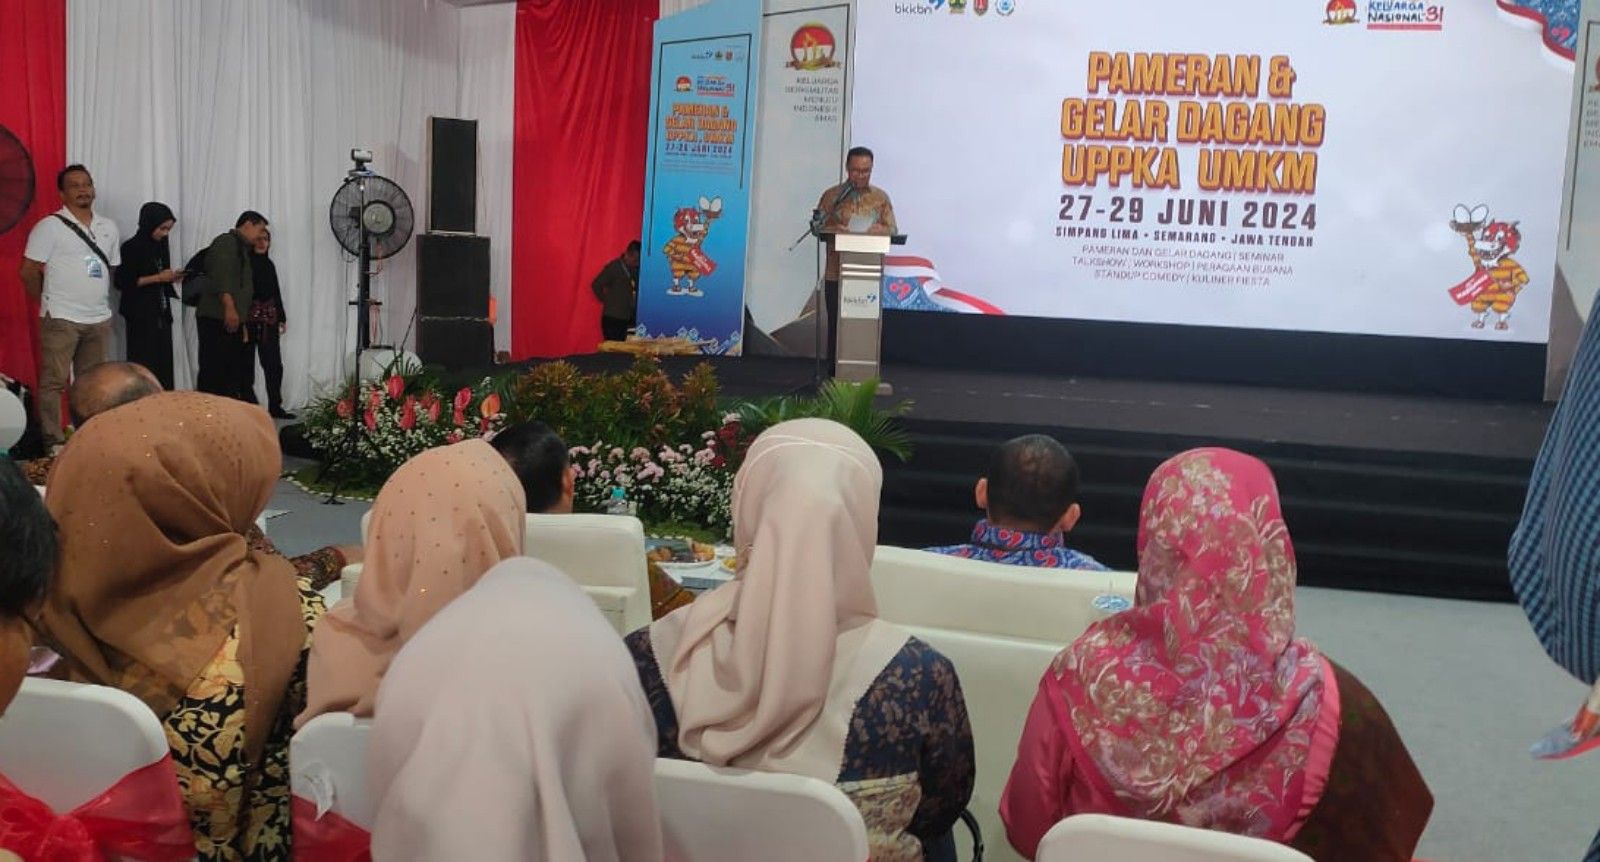 Kepala BKKBN RI Hasto Wardoyo saat membuka kegiatan pameran dan gelar dagang UPPKA UMKM Harganas 2024.